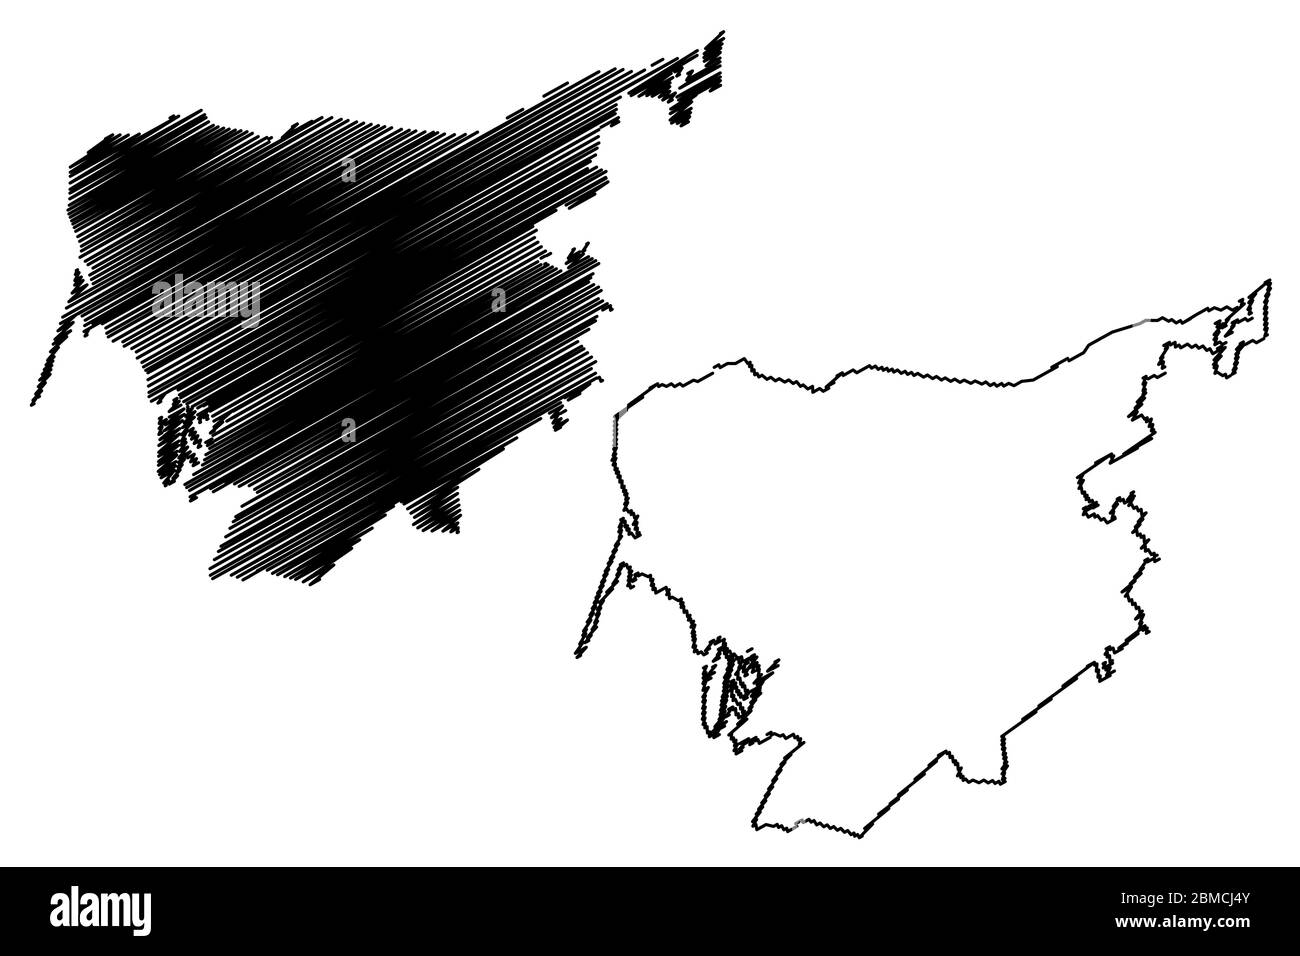 Engels City (Russian Federation, Russia, Saratov Oblast) map vector illustration, scribble sketch City of Pokrovsk or Kosakenstadt map Stock Vector